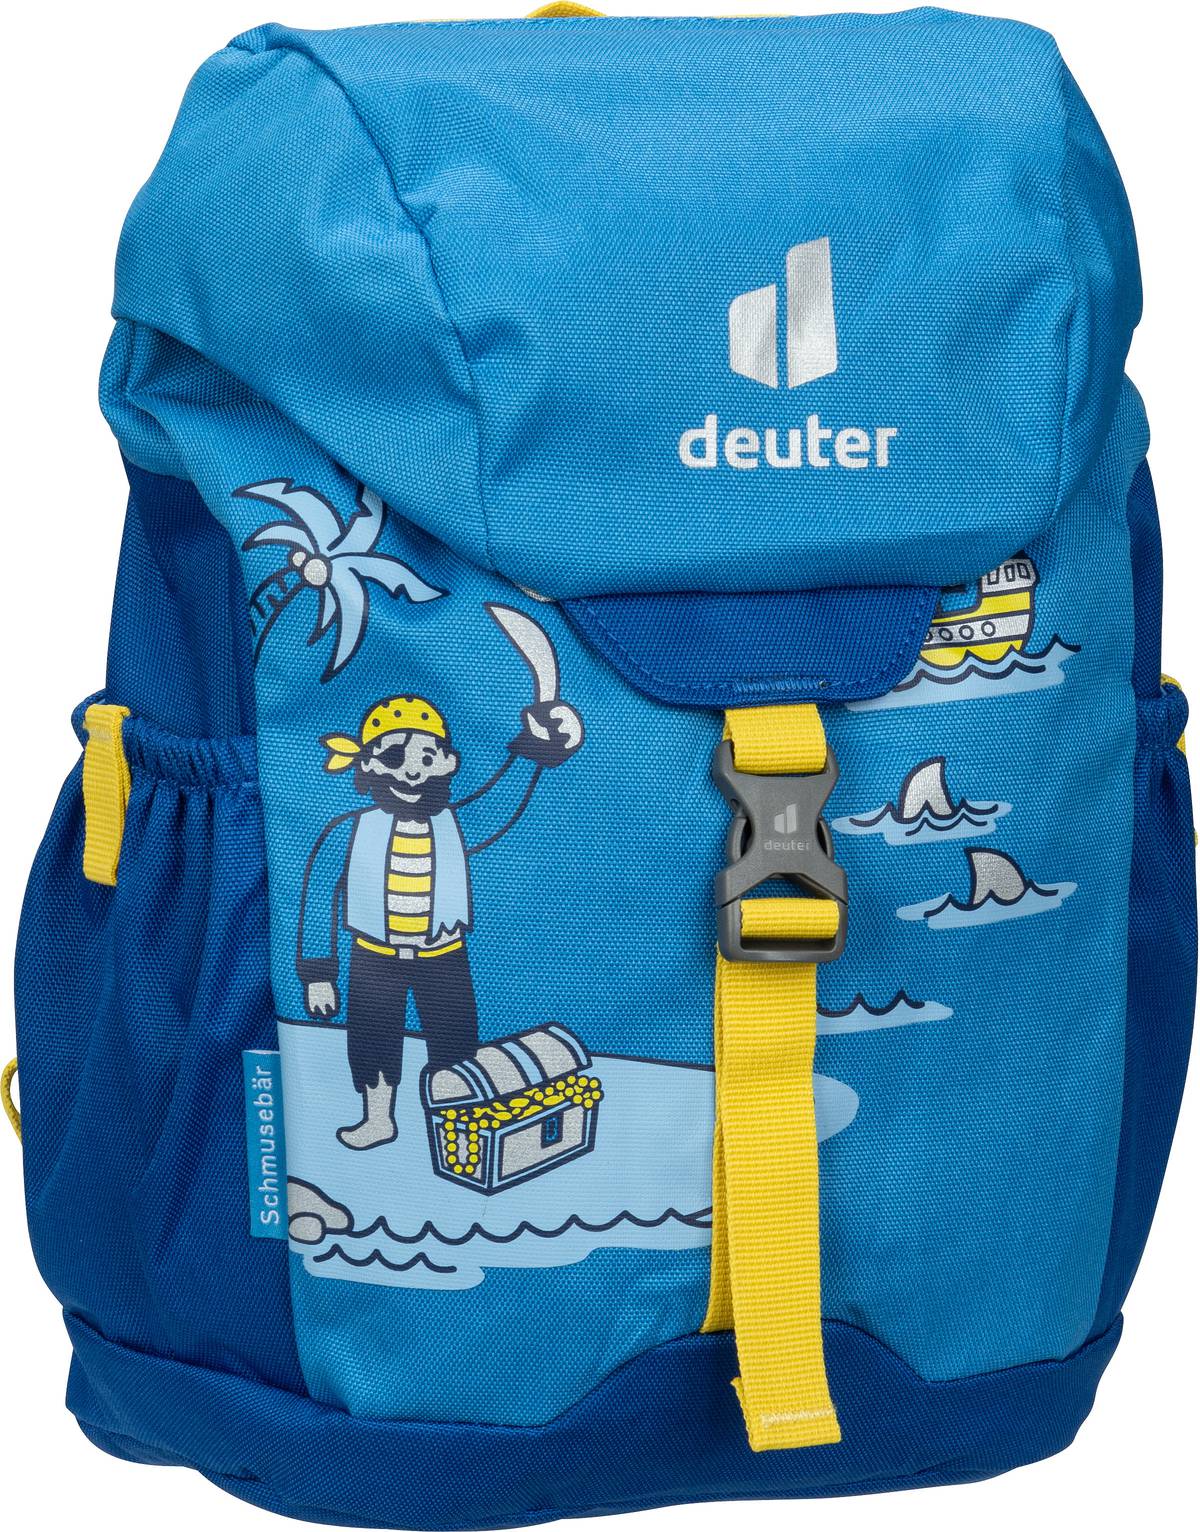 Deuter Schmusebär  in Blau (8 Liter), Rucksack / Backpack